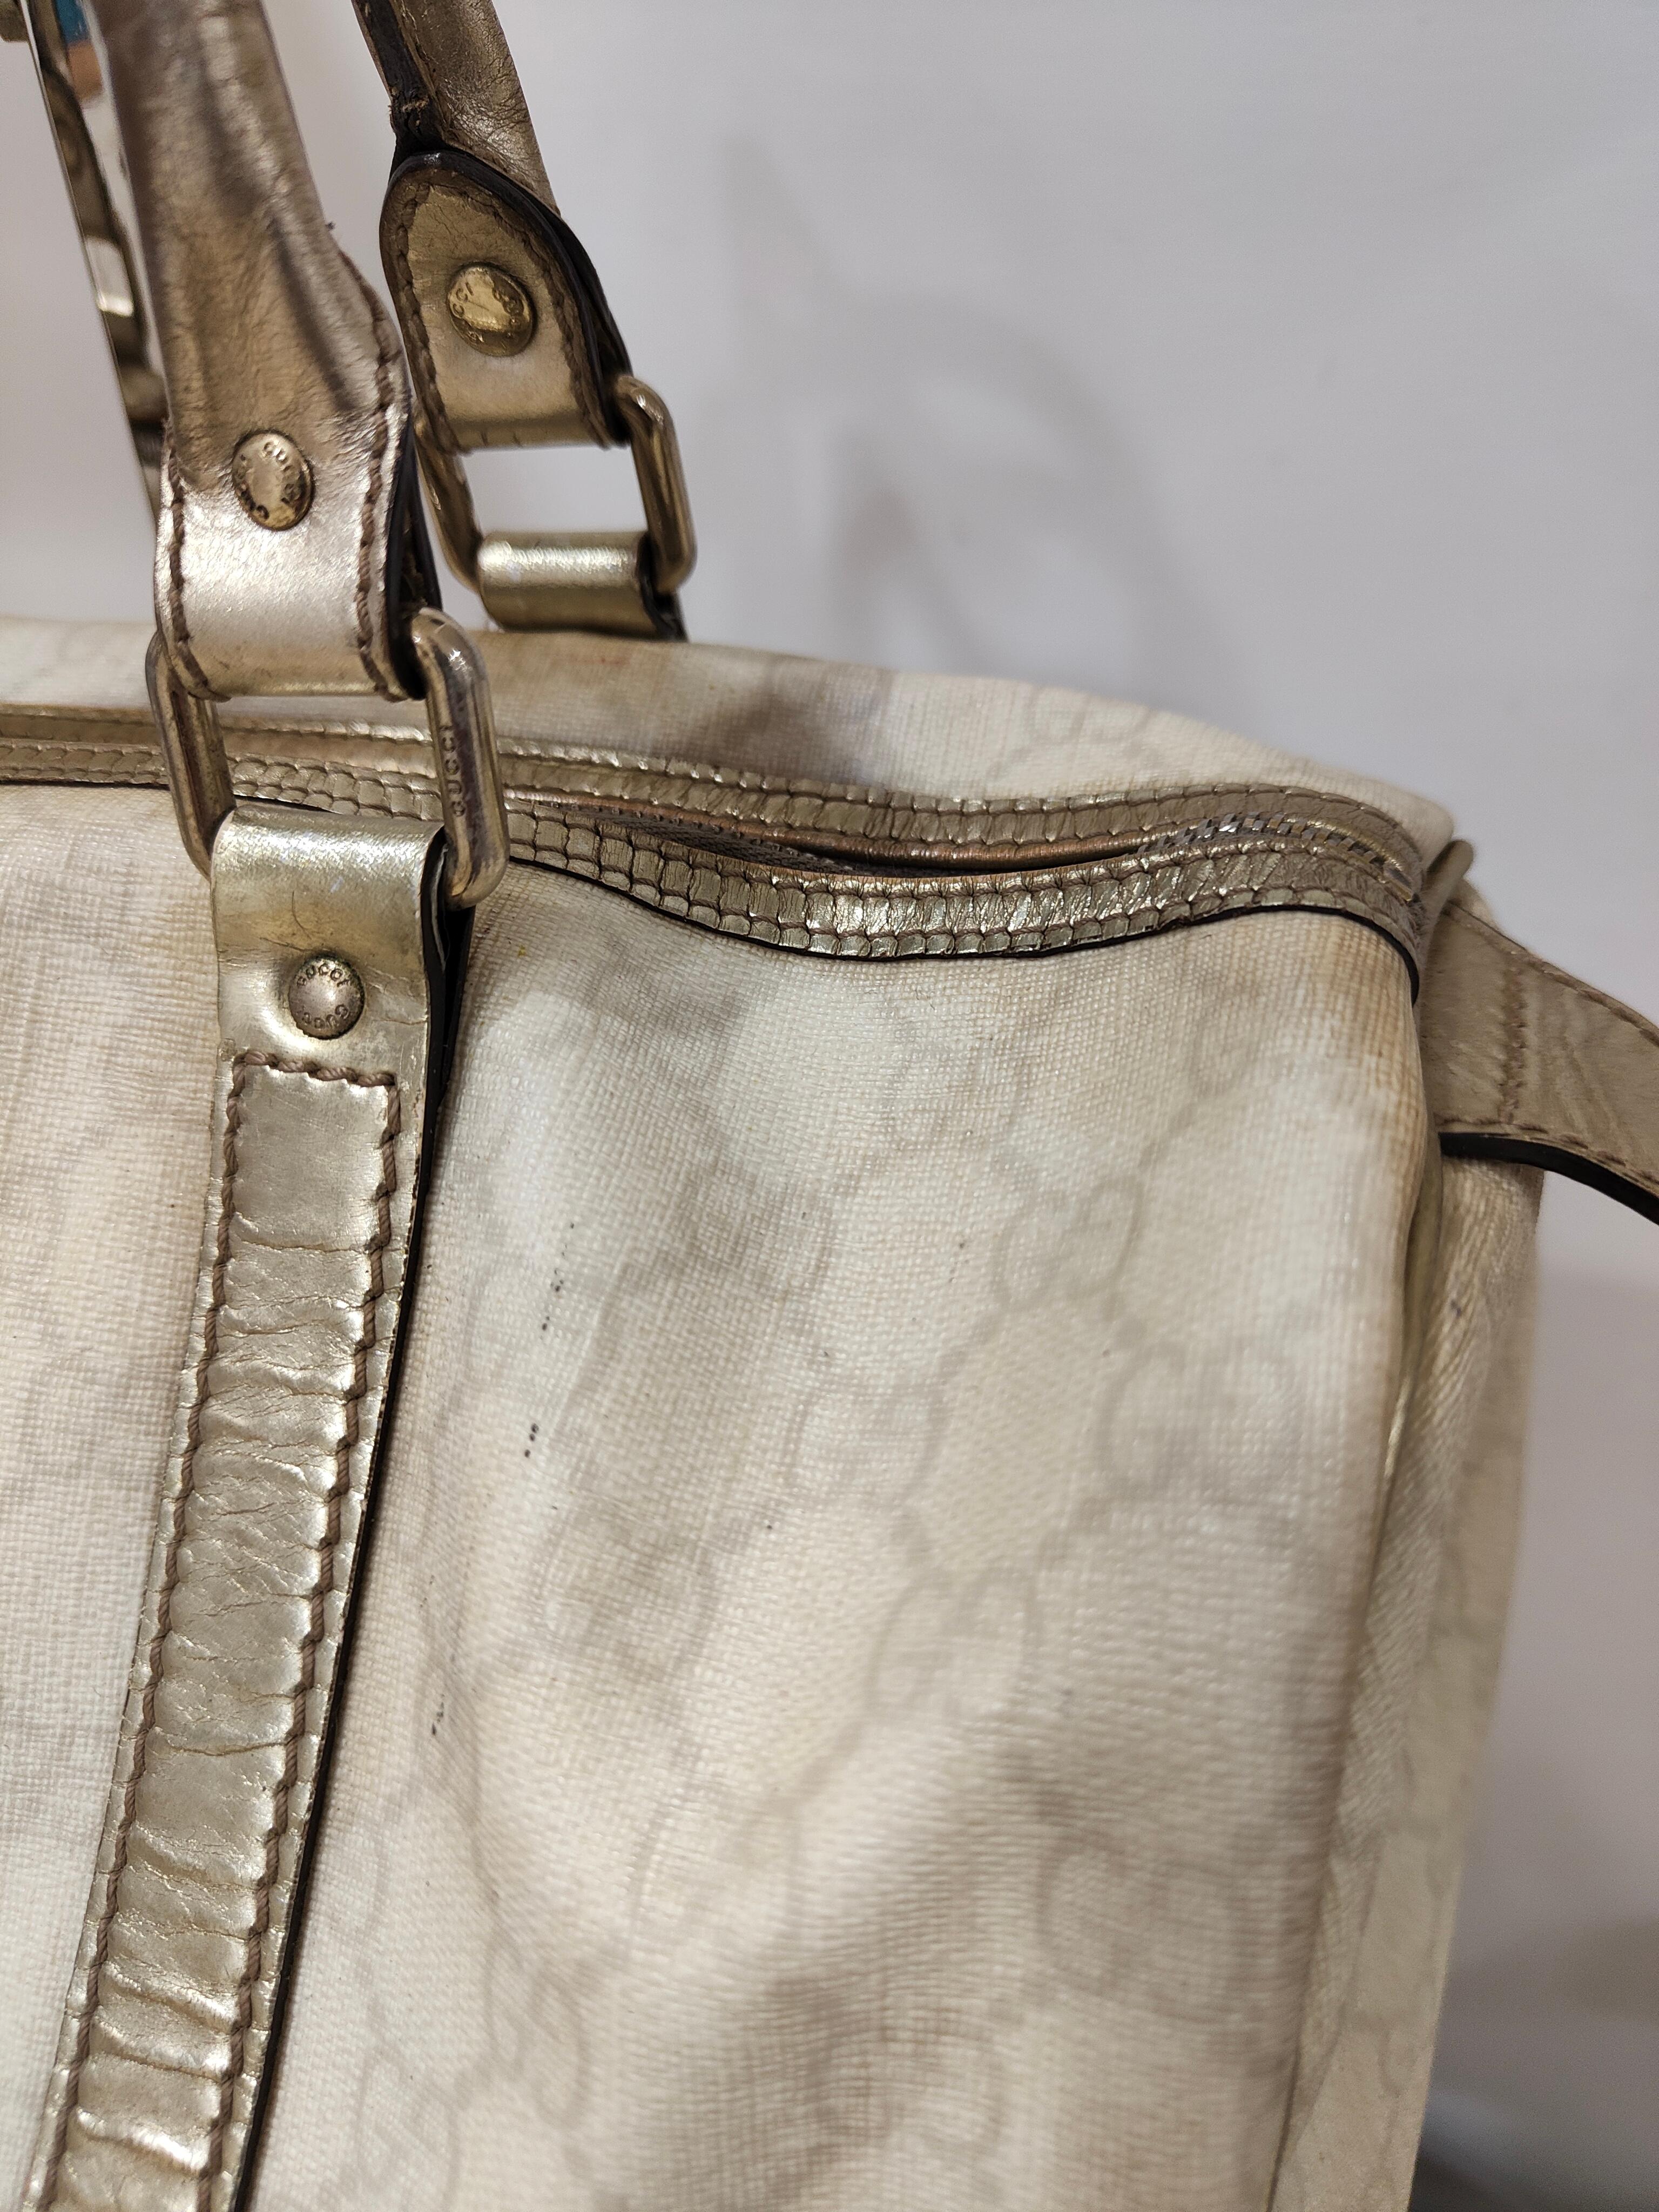 Gucci monogram gg gold leather speedy bag
measurements: 21 * 31 cm